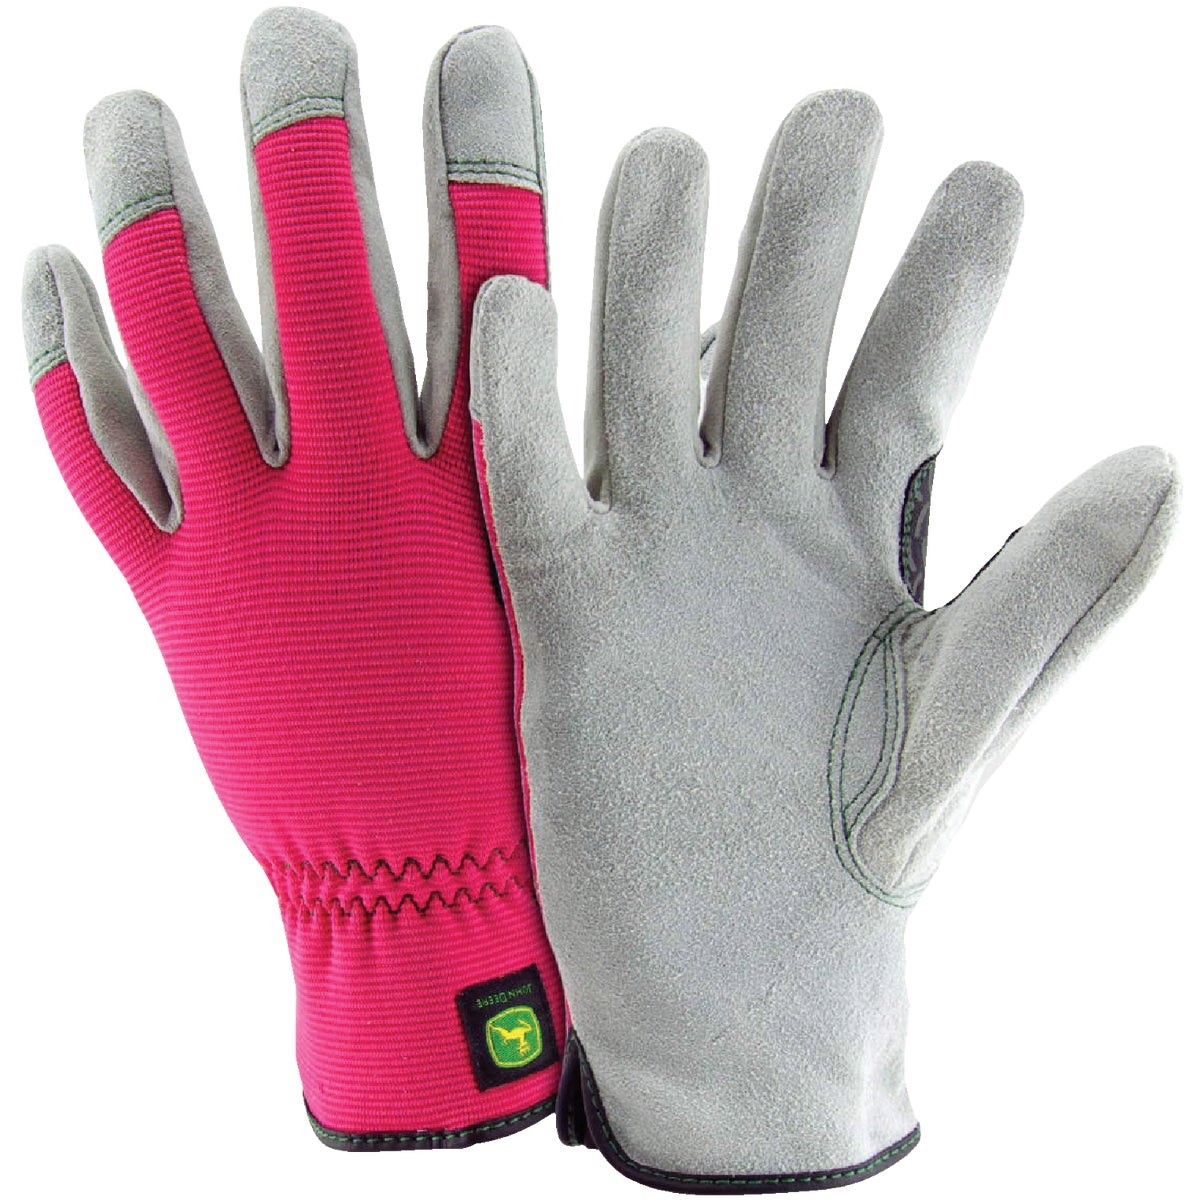 John Deere Women's Small/Medium Leather Work Glove